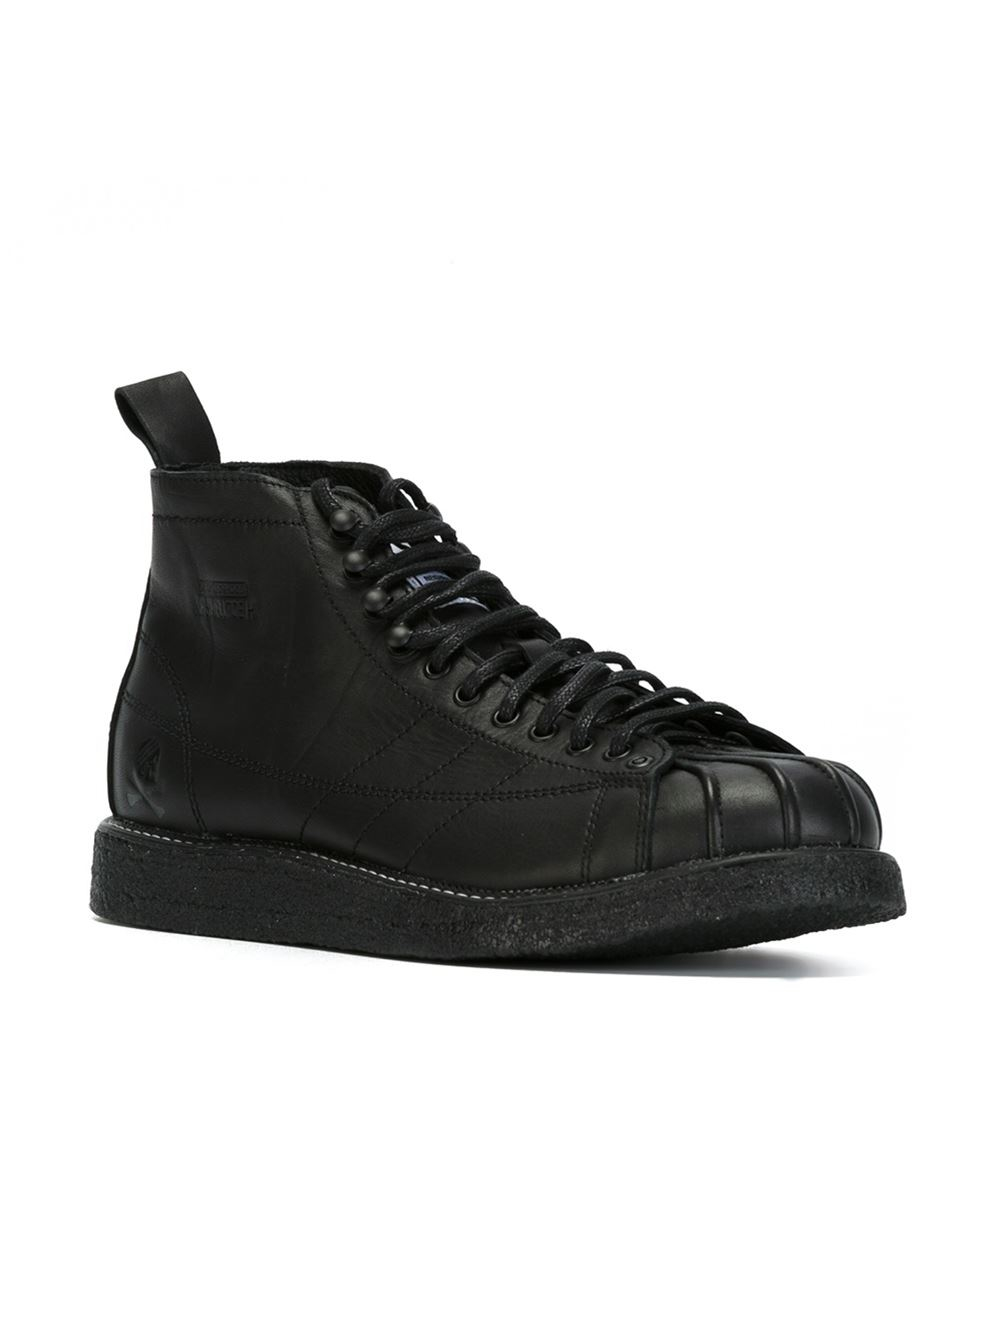 adidas Originals X Neighborhood 'nh Shelltoe' Sneaker in Black for Men -  Lyst